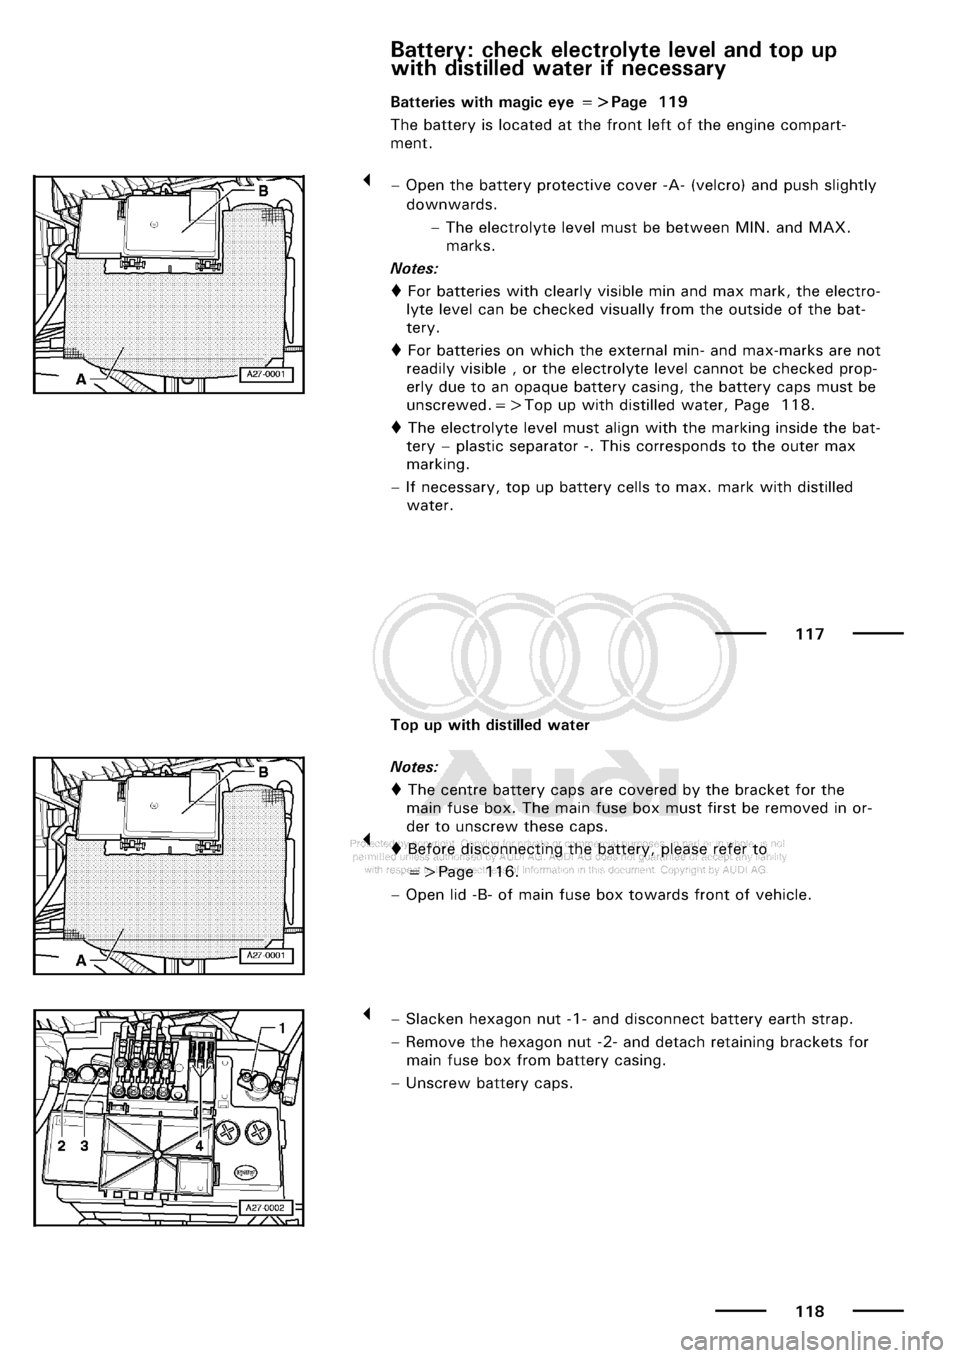 Service Manual PDF: [2007 audi a3 workshop manuals ...